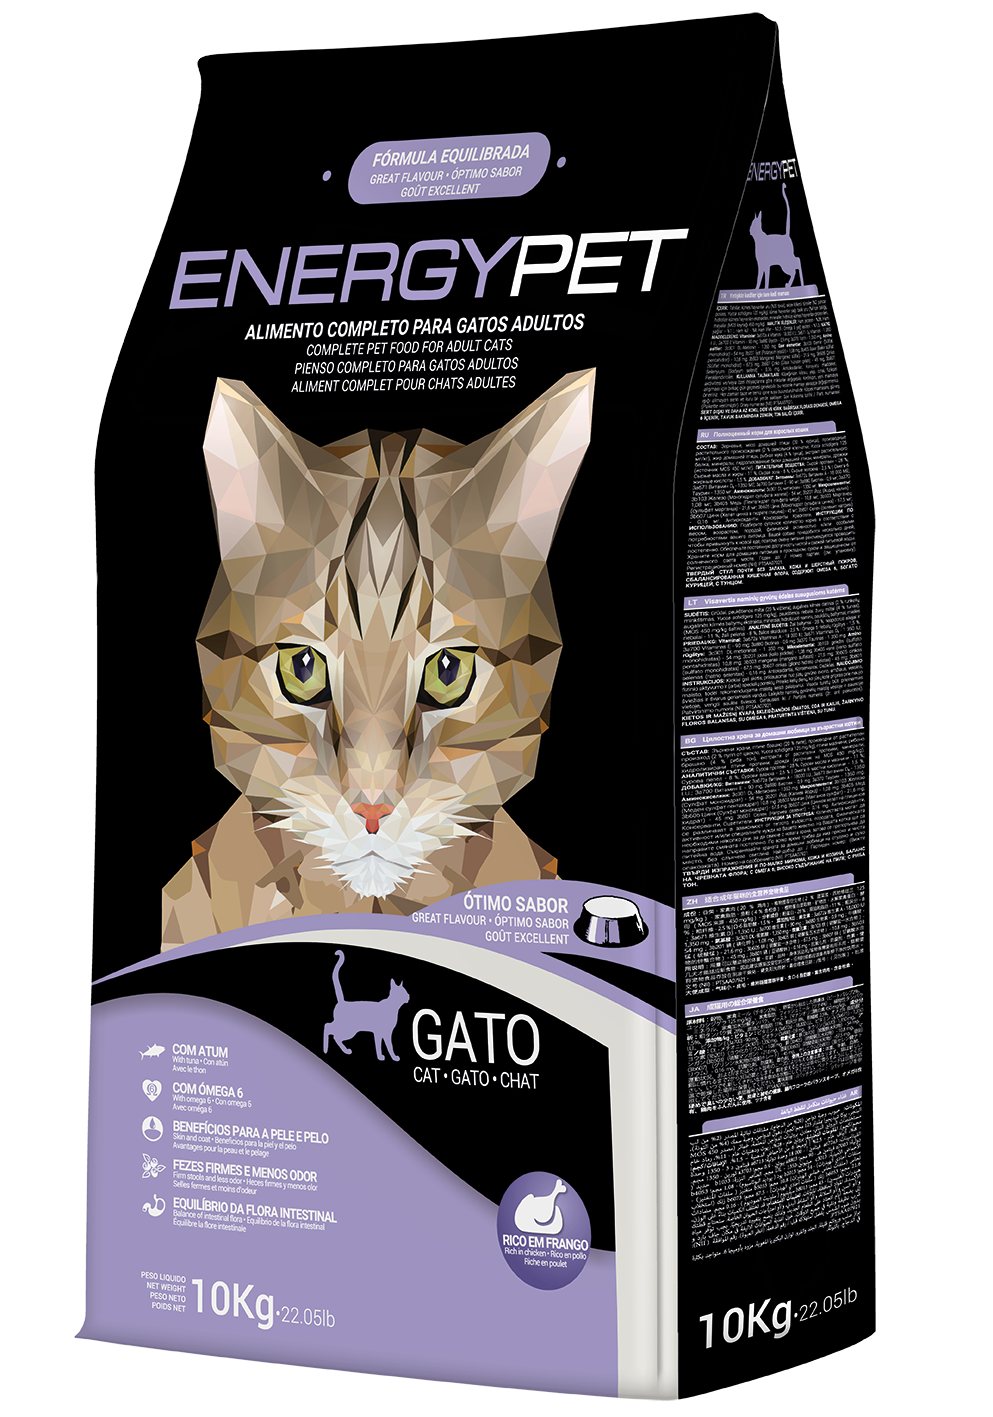 能量寵物貓 10kg - Chrysdietetic